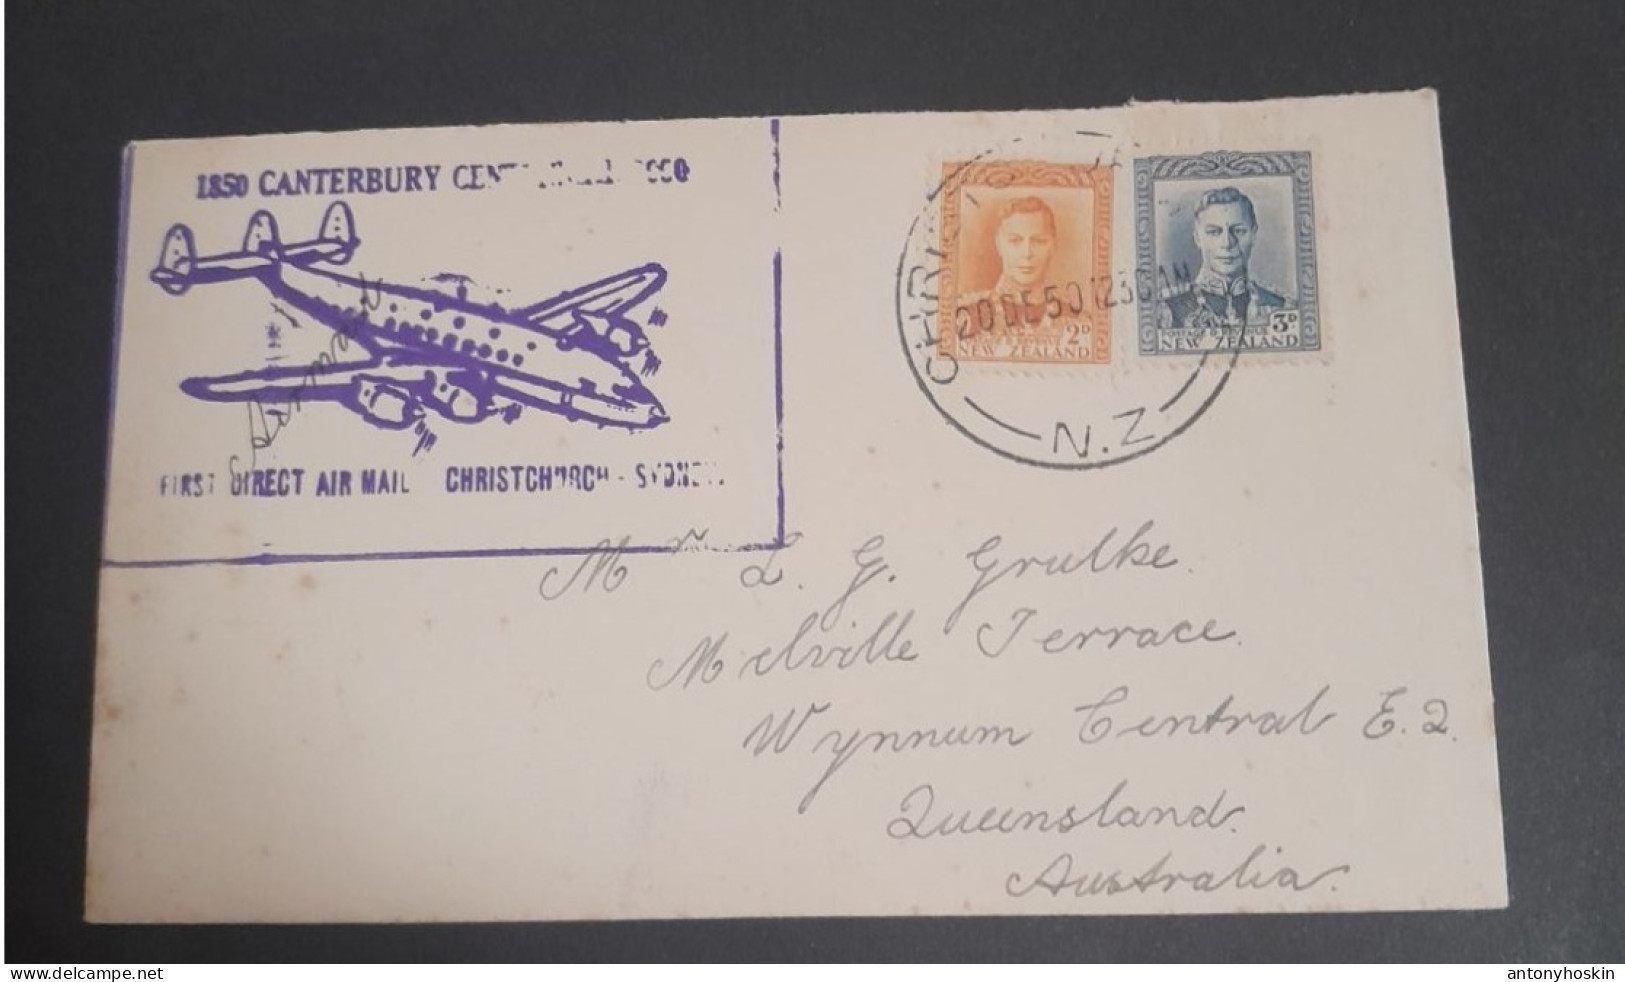 20 Dec 1950 First Direct Air Mail Christchurch -Sydney - Luftpost